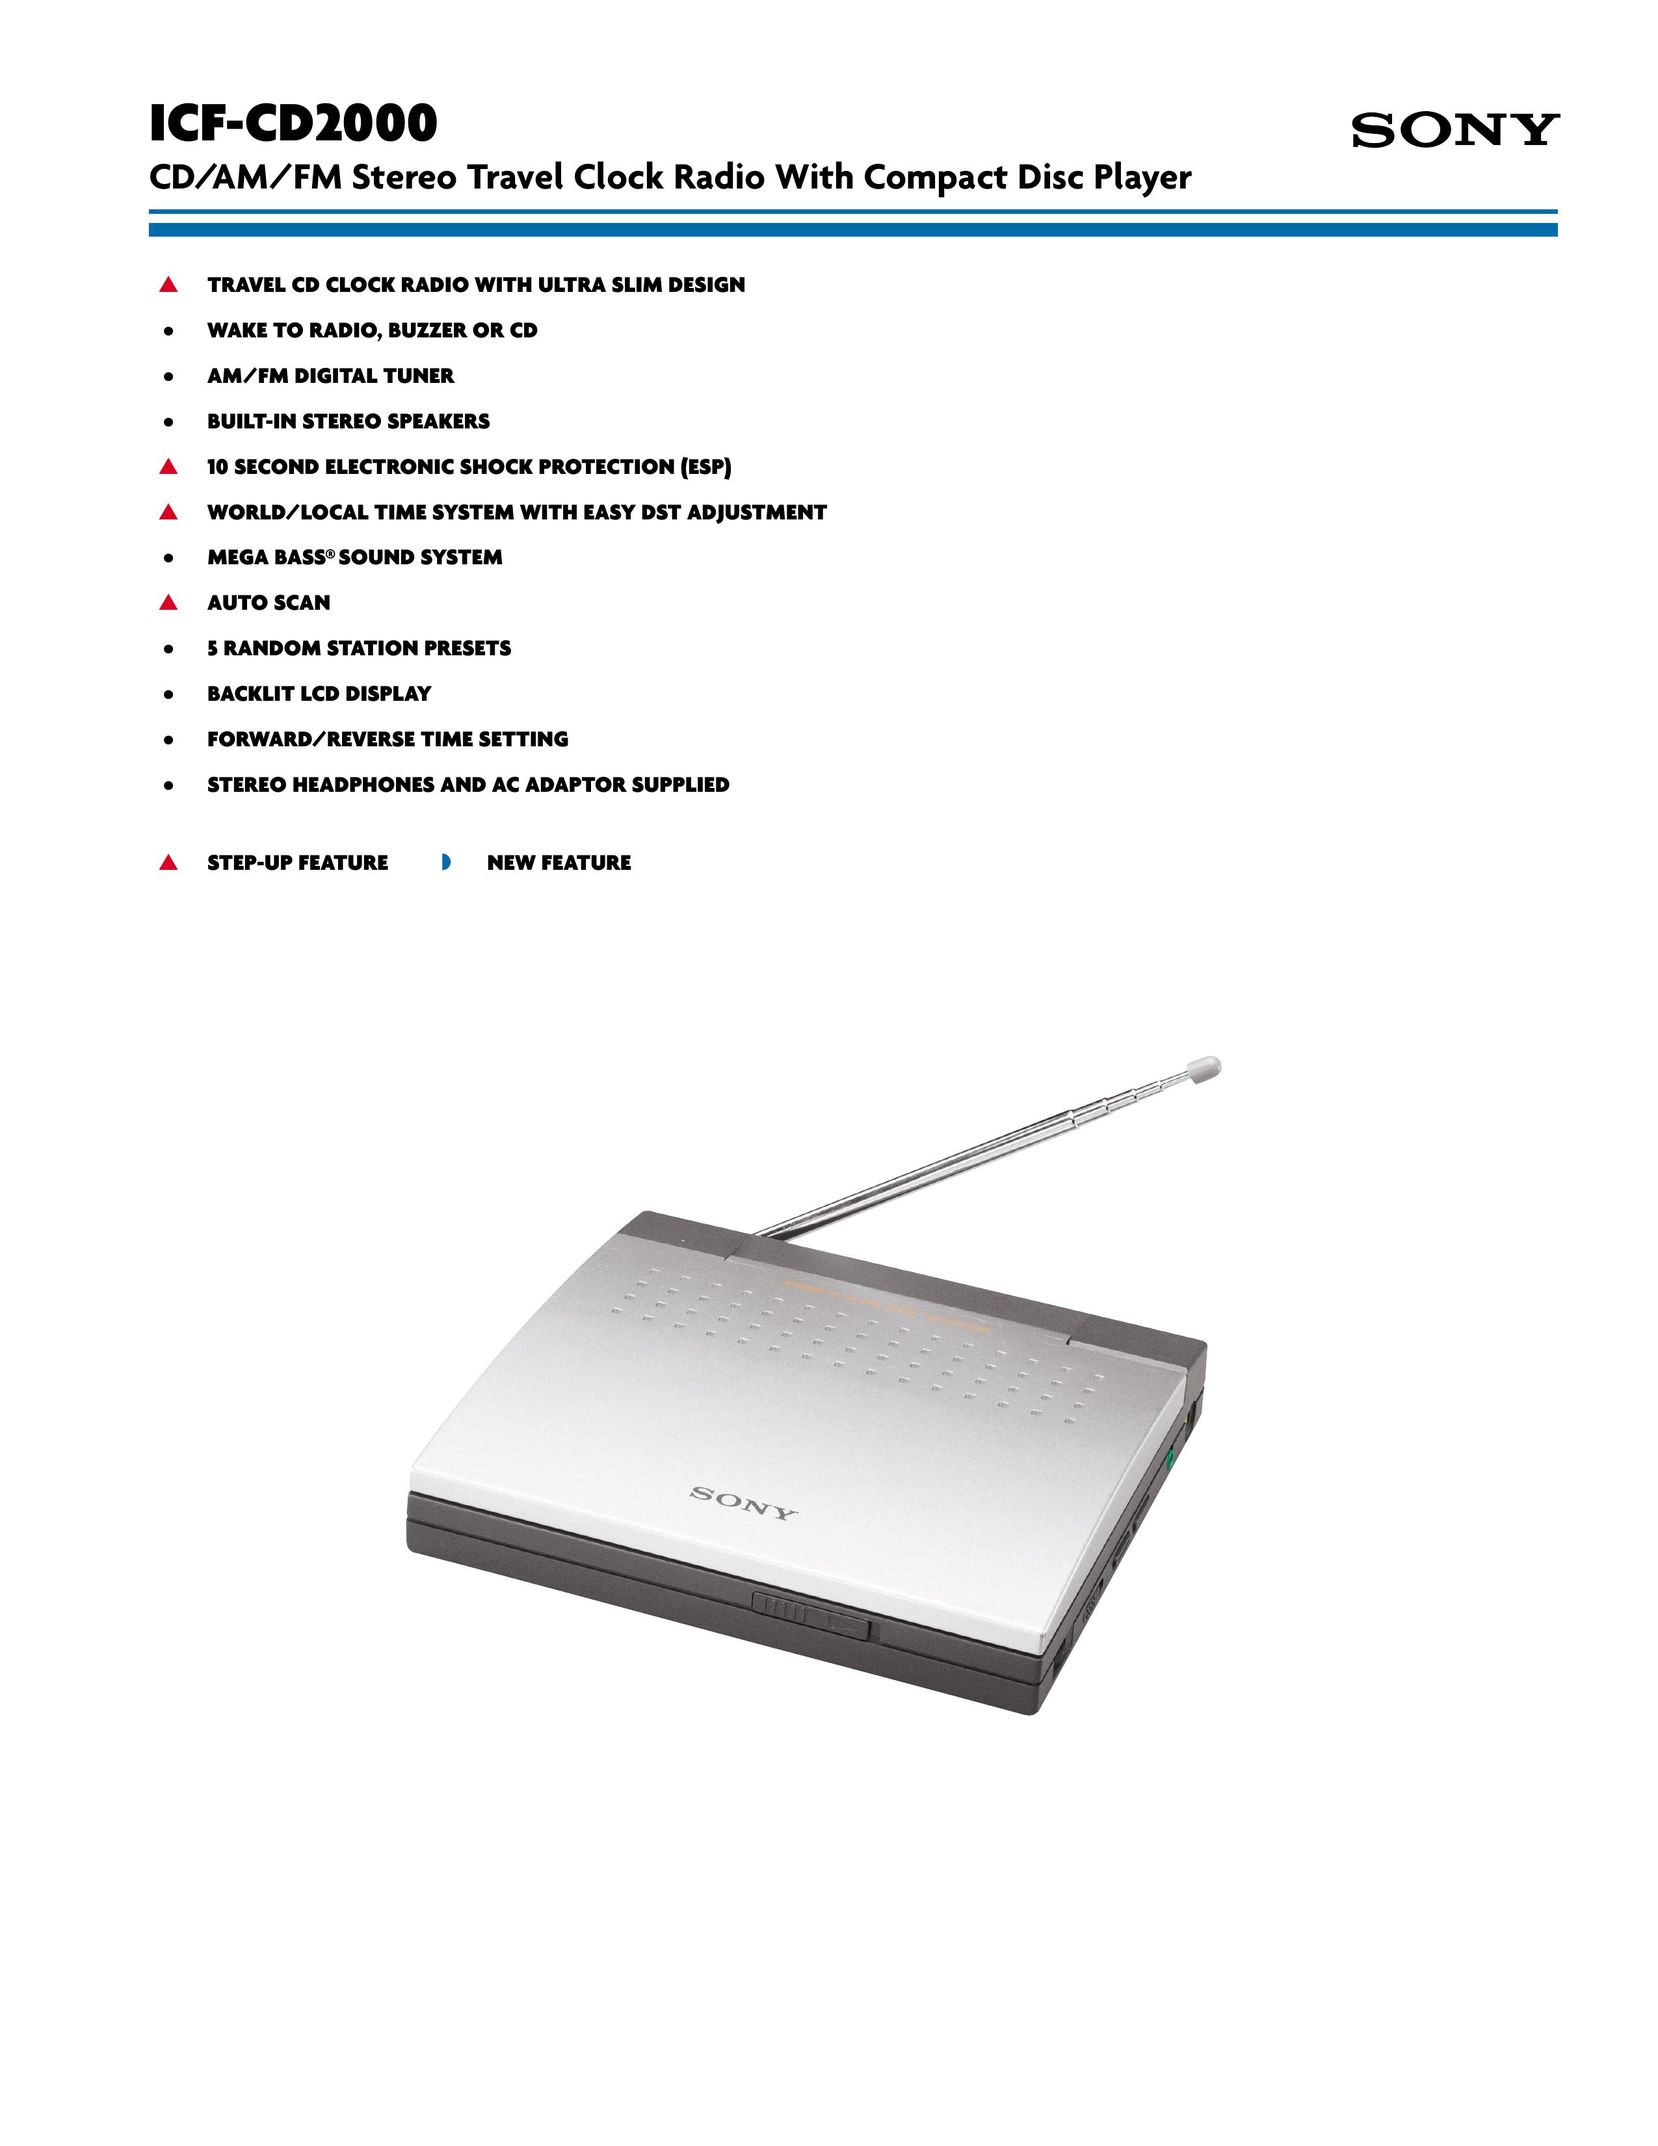 Sony ICF-CD2000 Radio Antenna User Manual